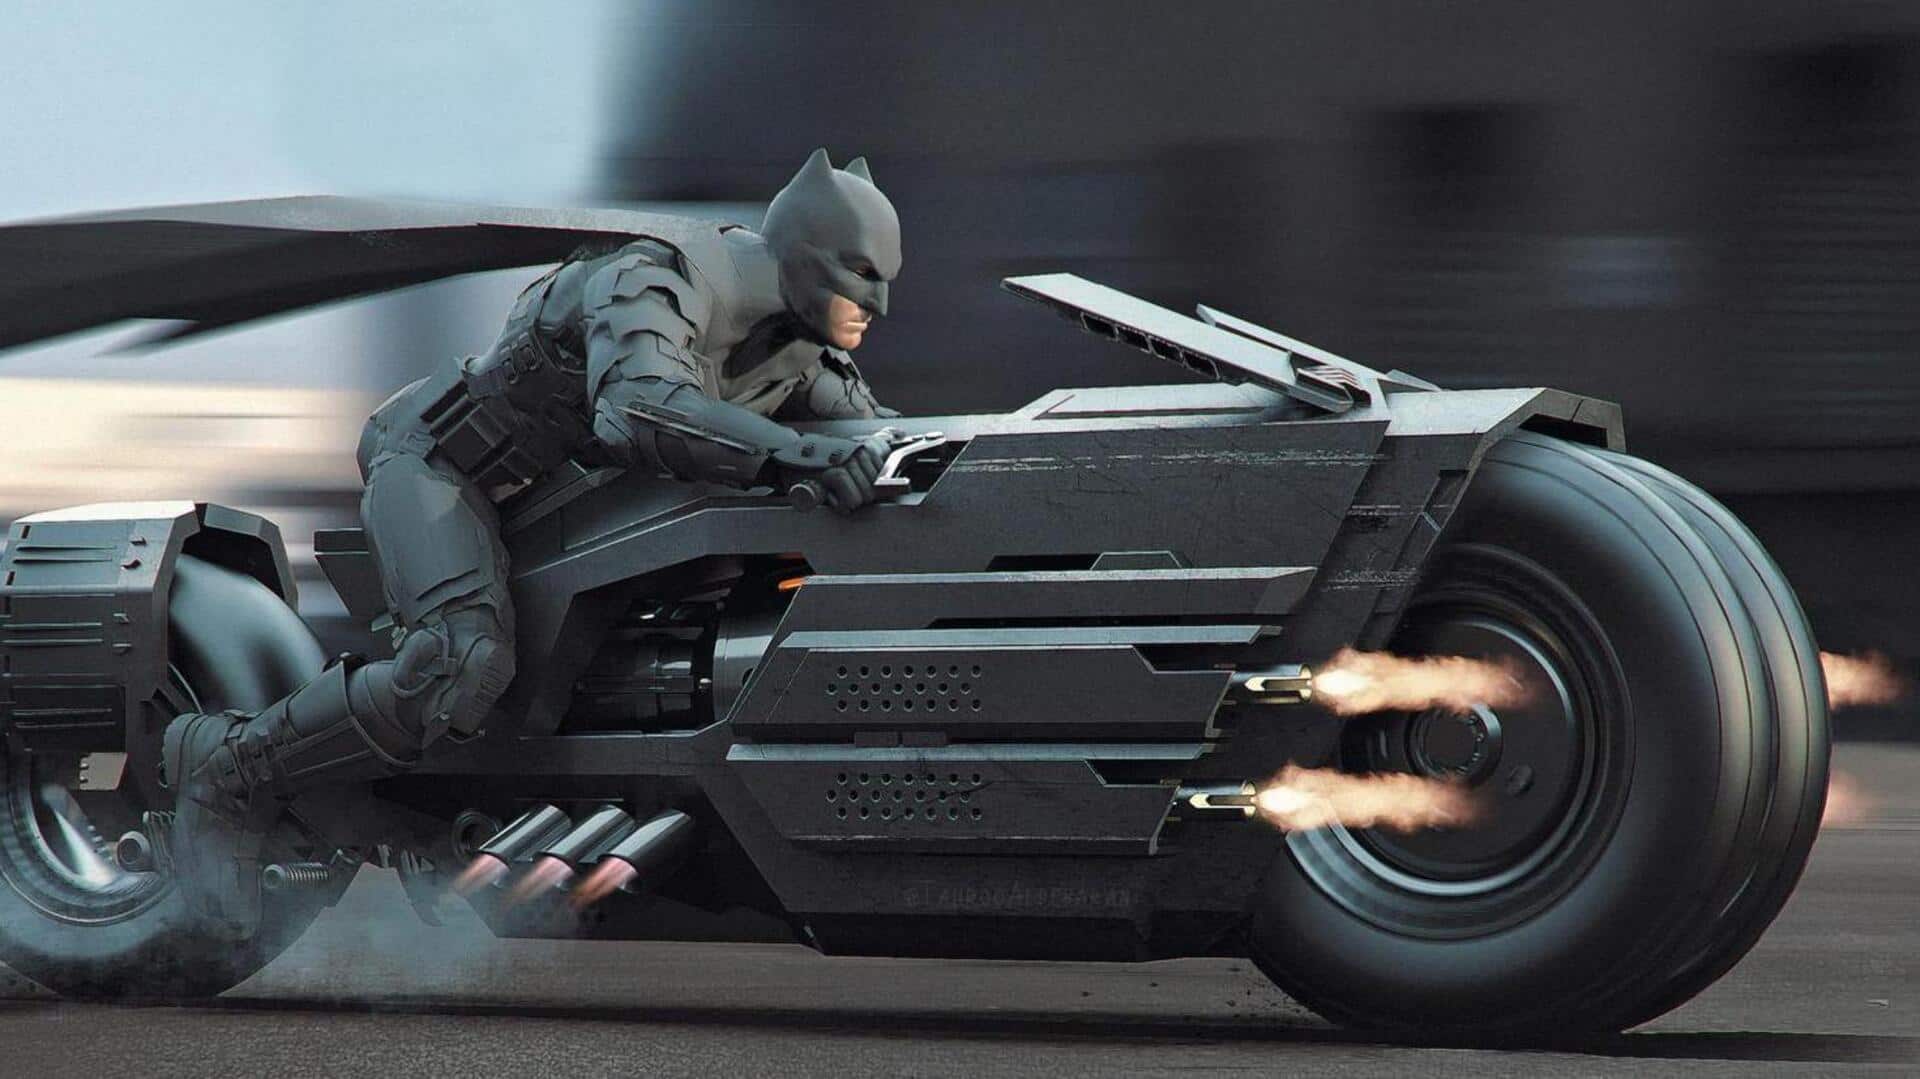 The Dark Knight - Batman's Motorcycle. Batpod [HD] Motorcycle Full